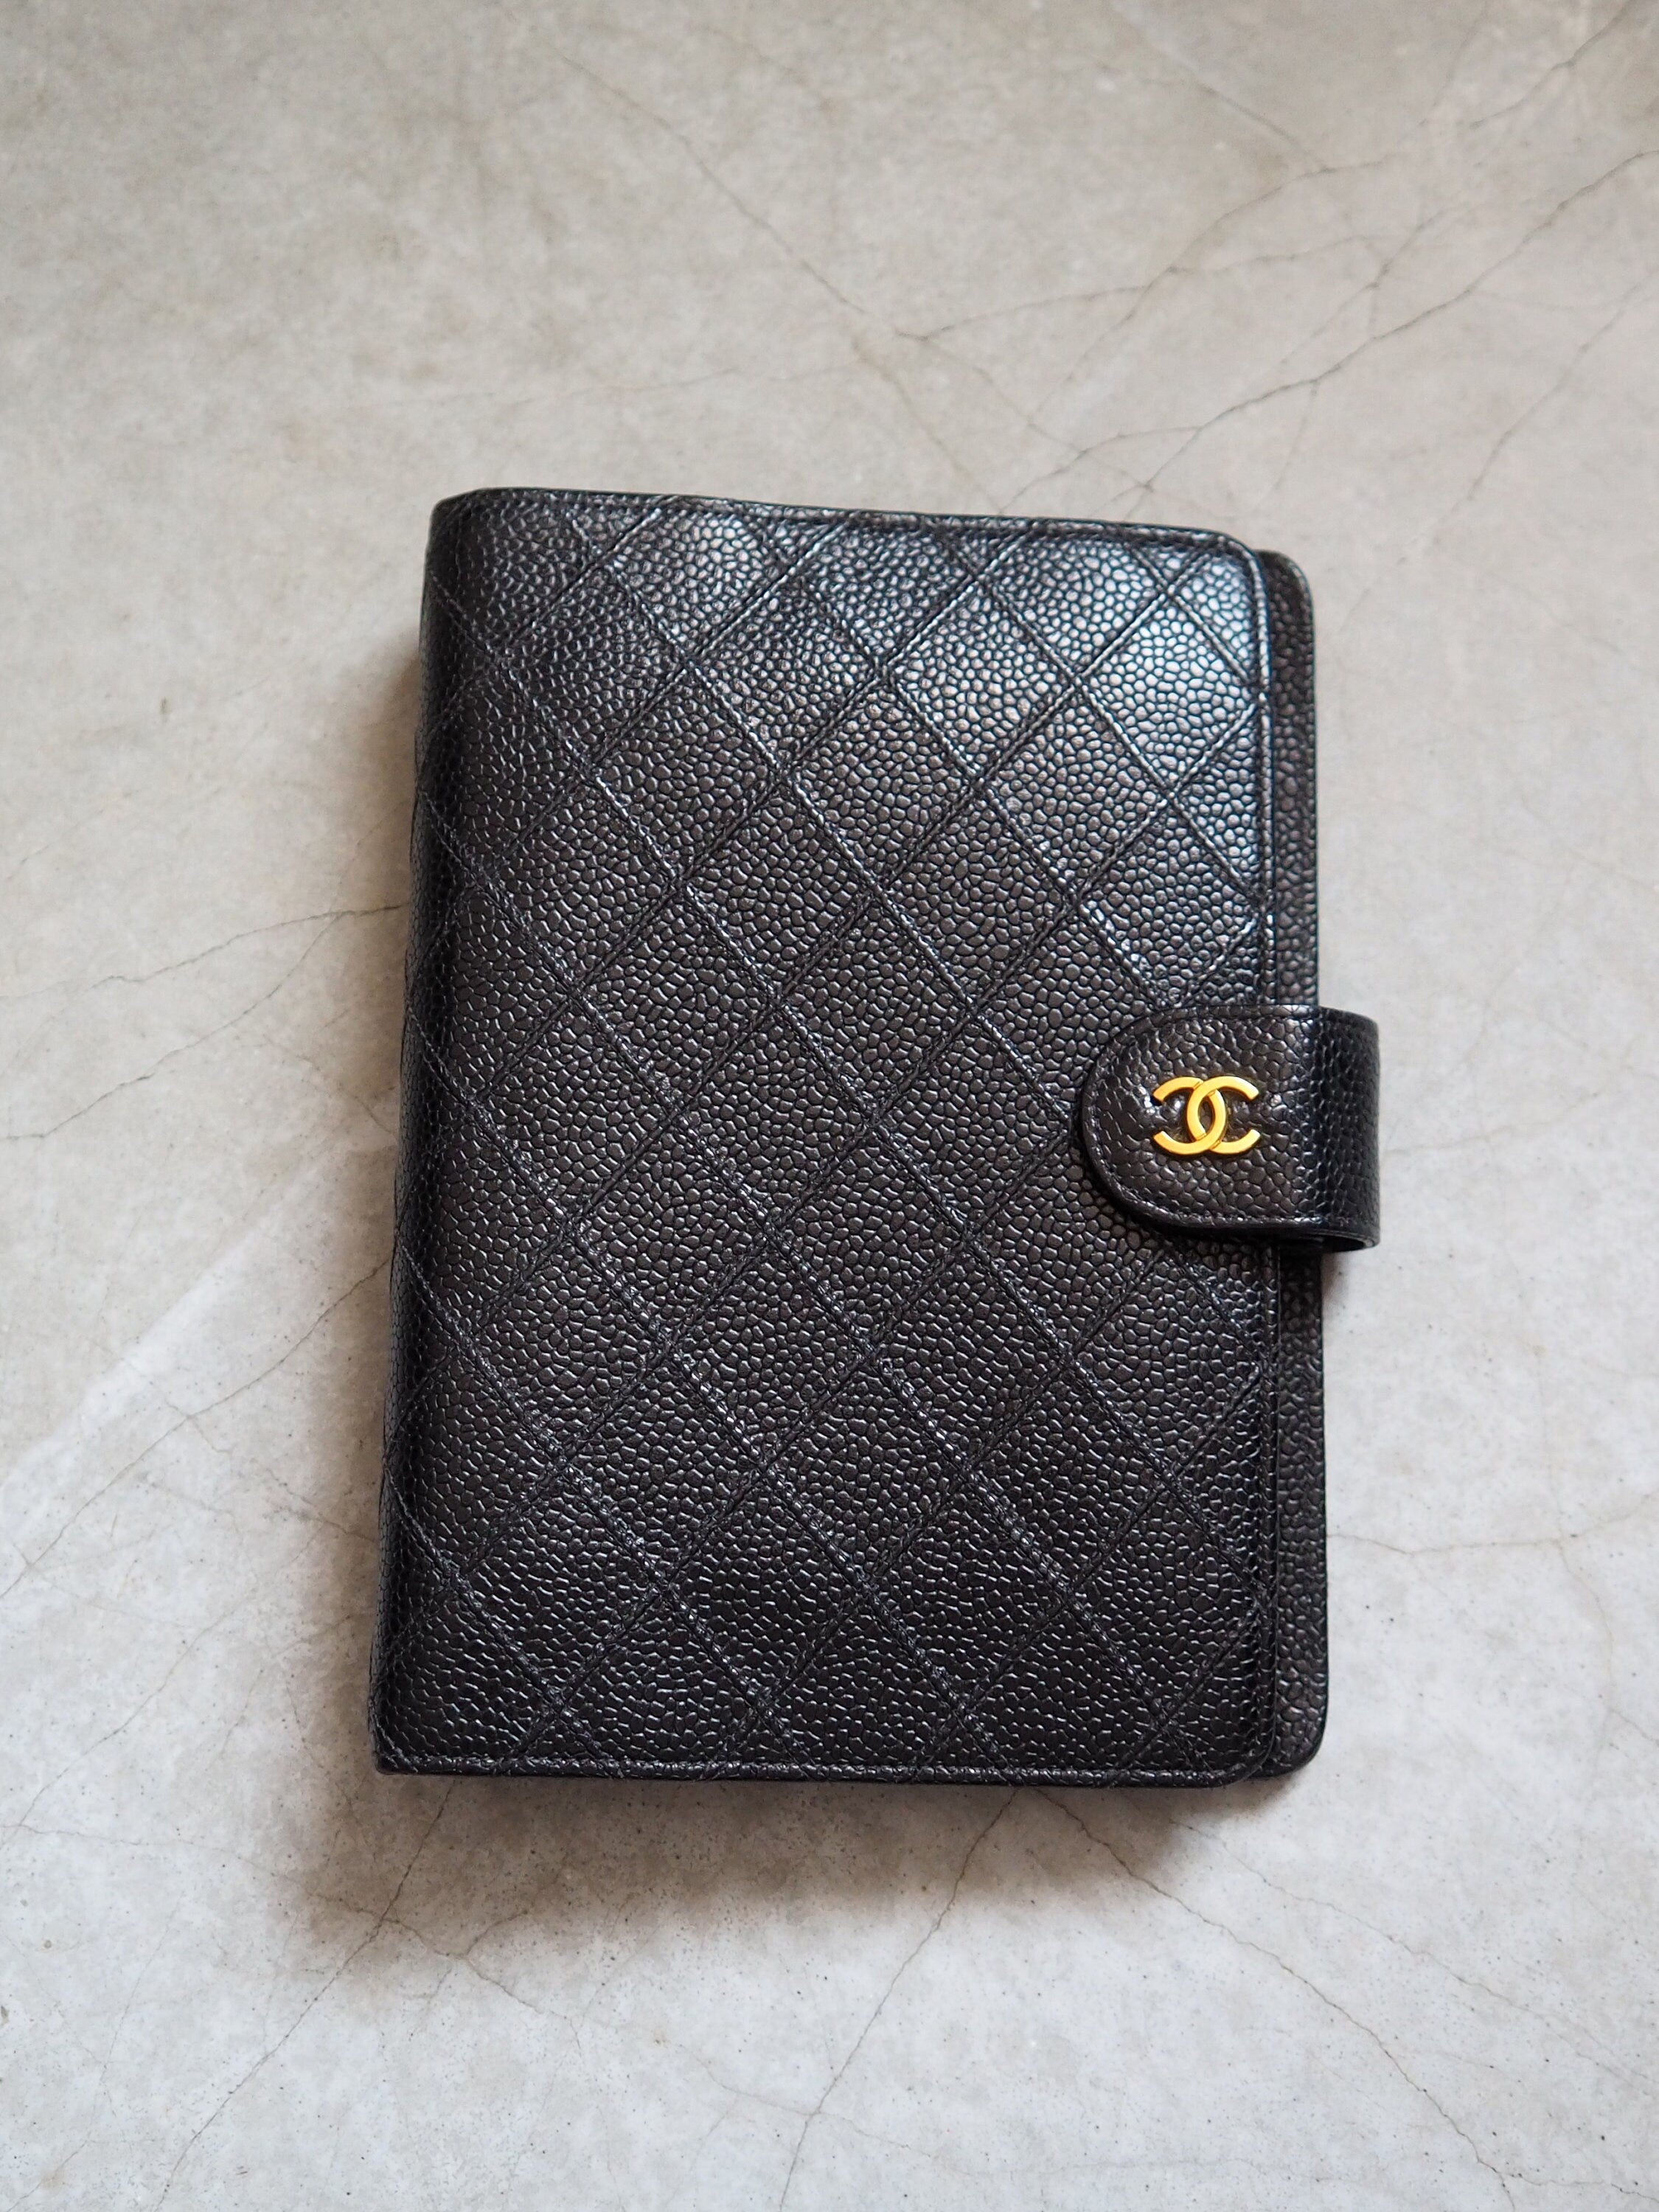 CHANEL CC Matelasse BICOLORE Agenda Leather 6 Ring Diary Black Vintage Authentic